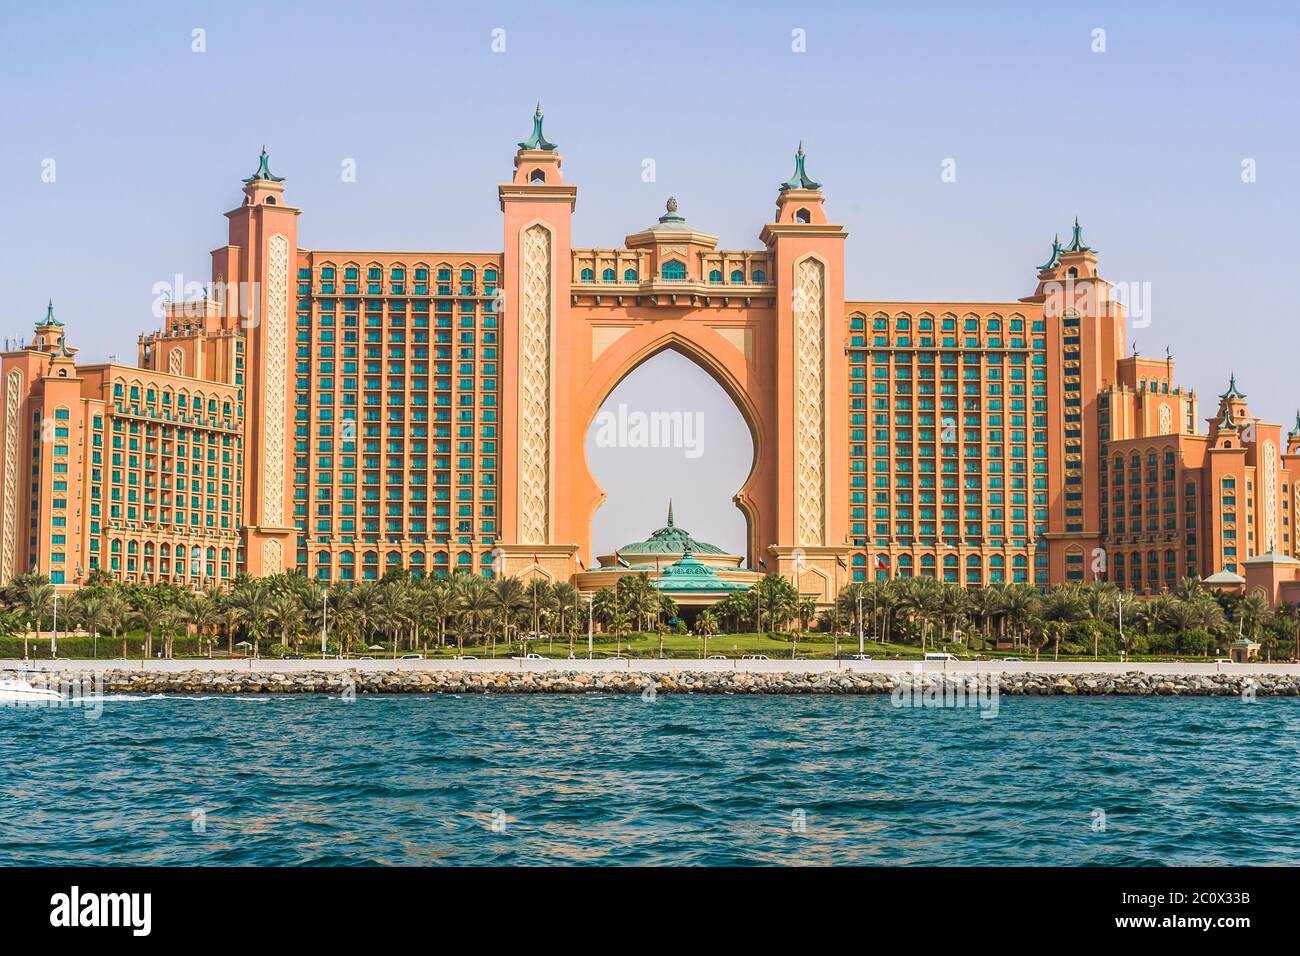 Atlantis, The Palm Hotel in Dubai, United Arab Emirates Stock Photo